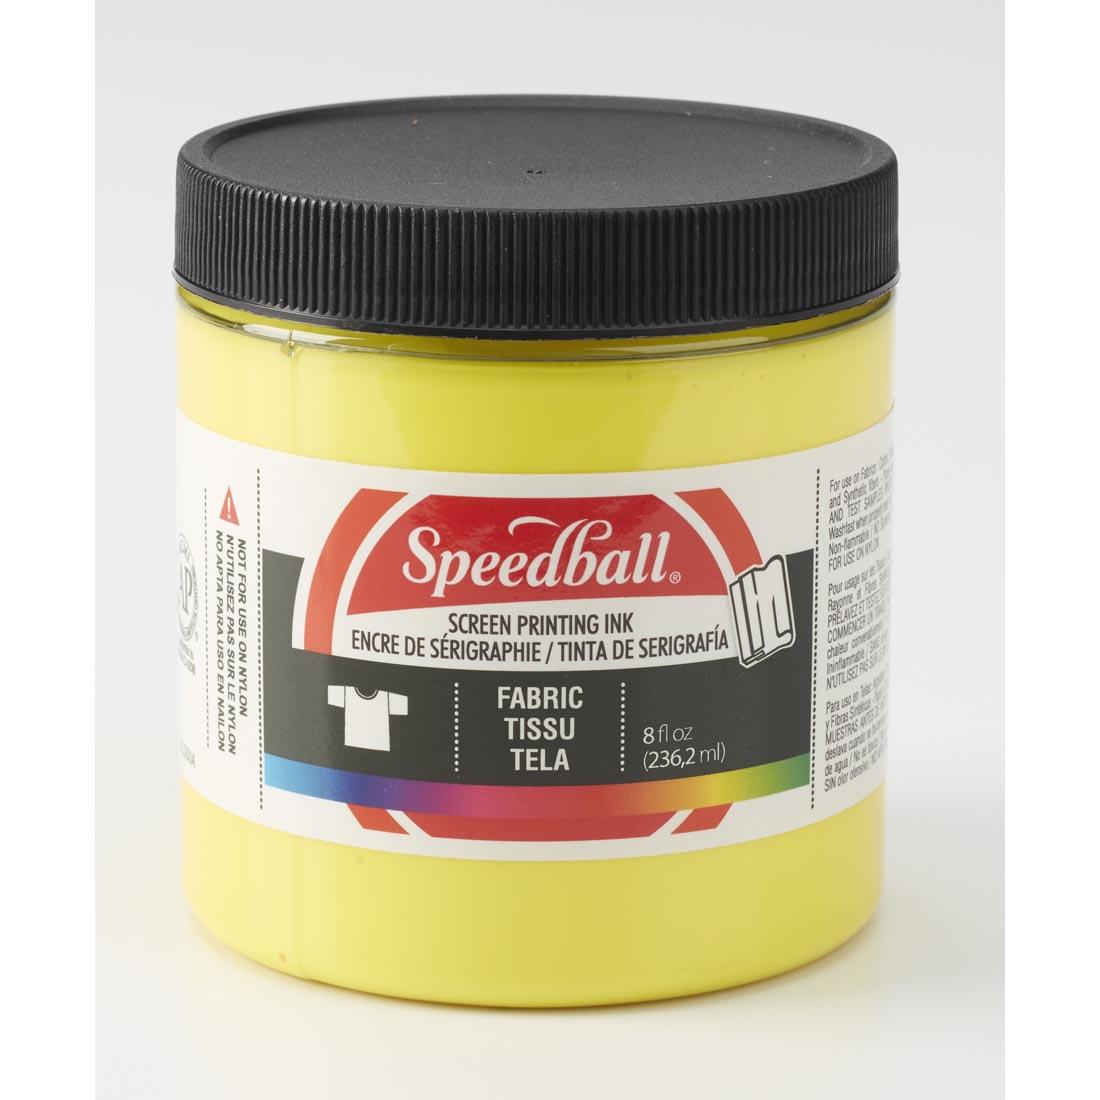 Jar of Process Yellow Speedball Fabric Screen Printing Ink